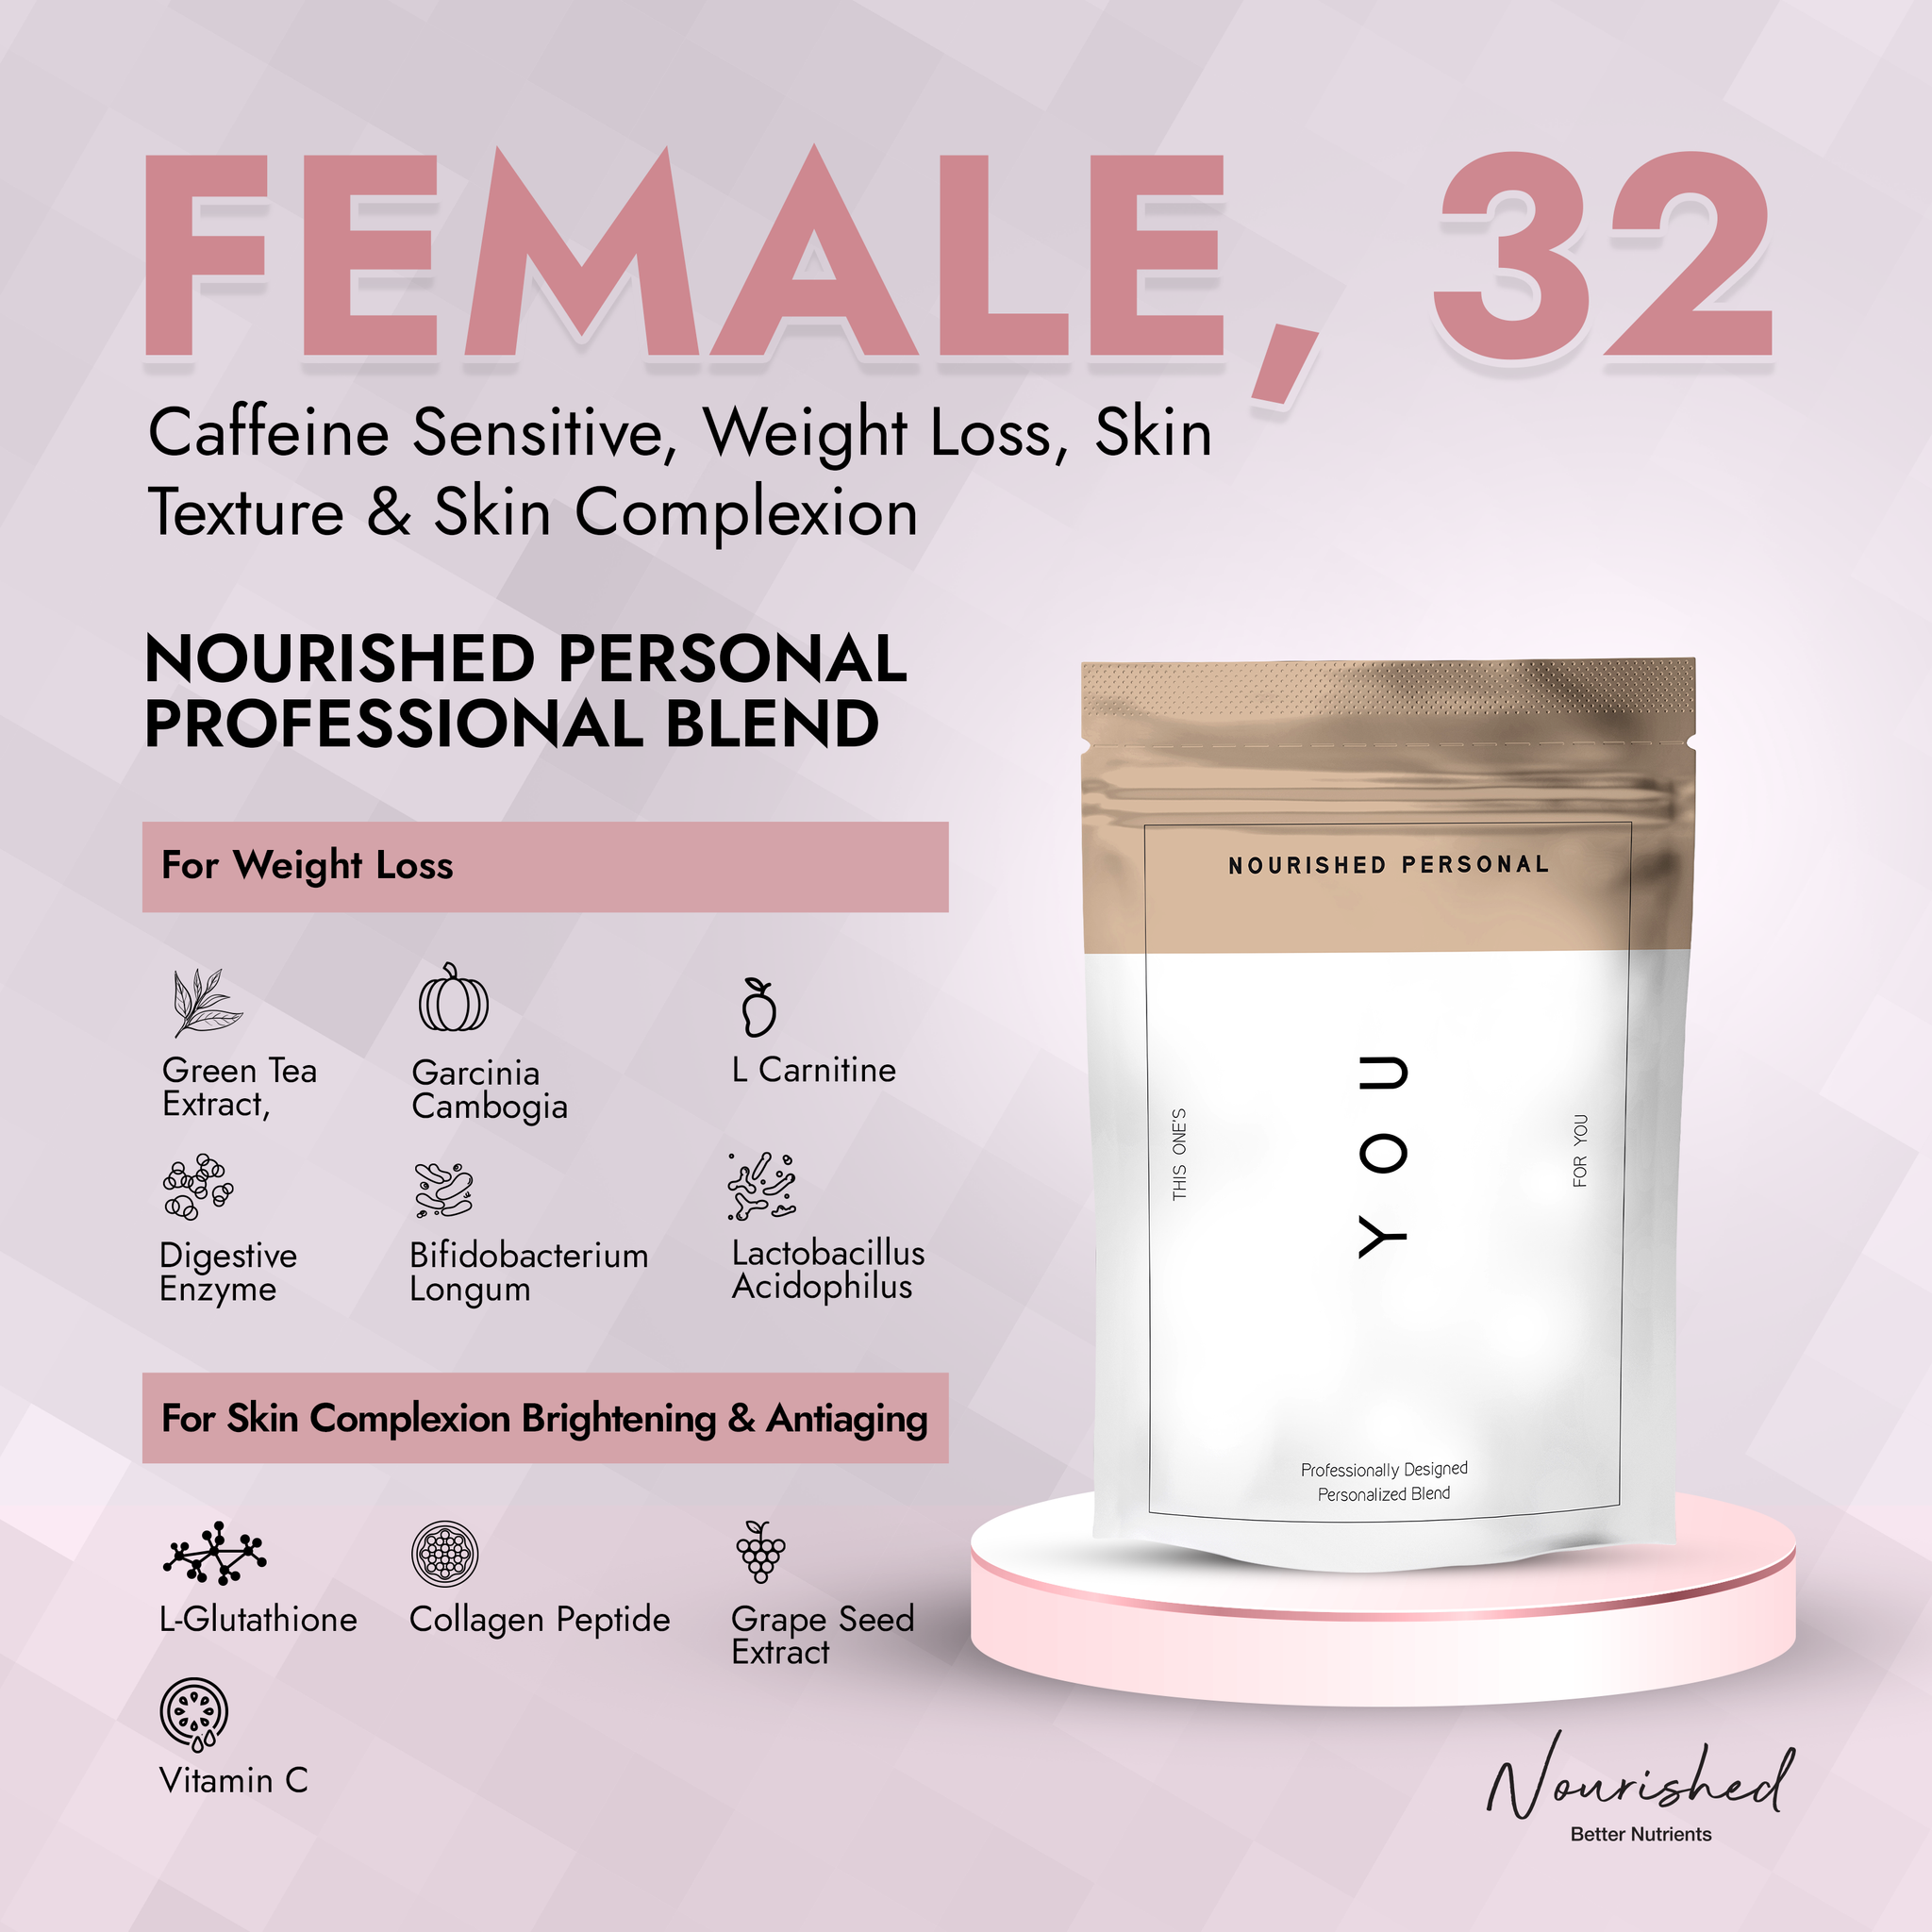 Case Study 54: Female, 32 - Caffeine Sensitive, Weight Loss, Skin Texture & Skin Complexion